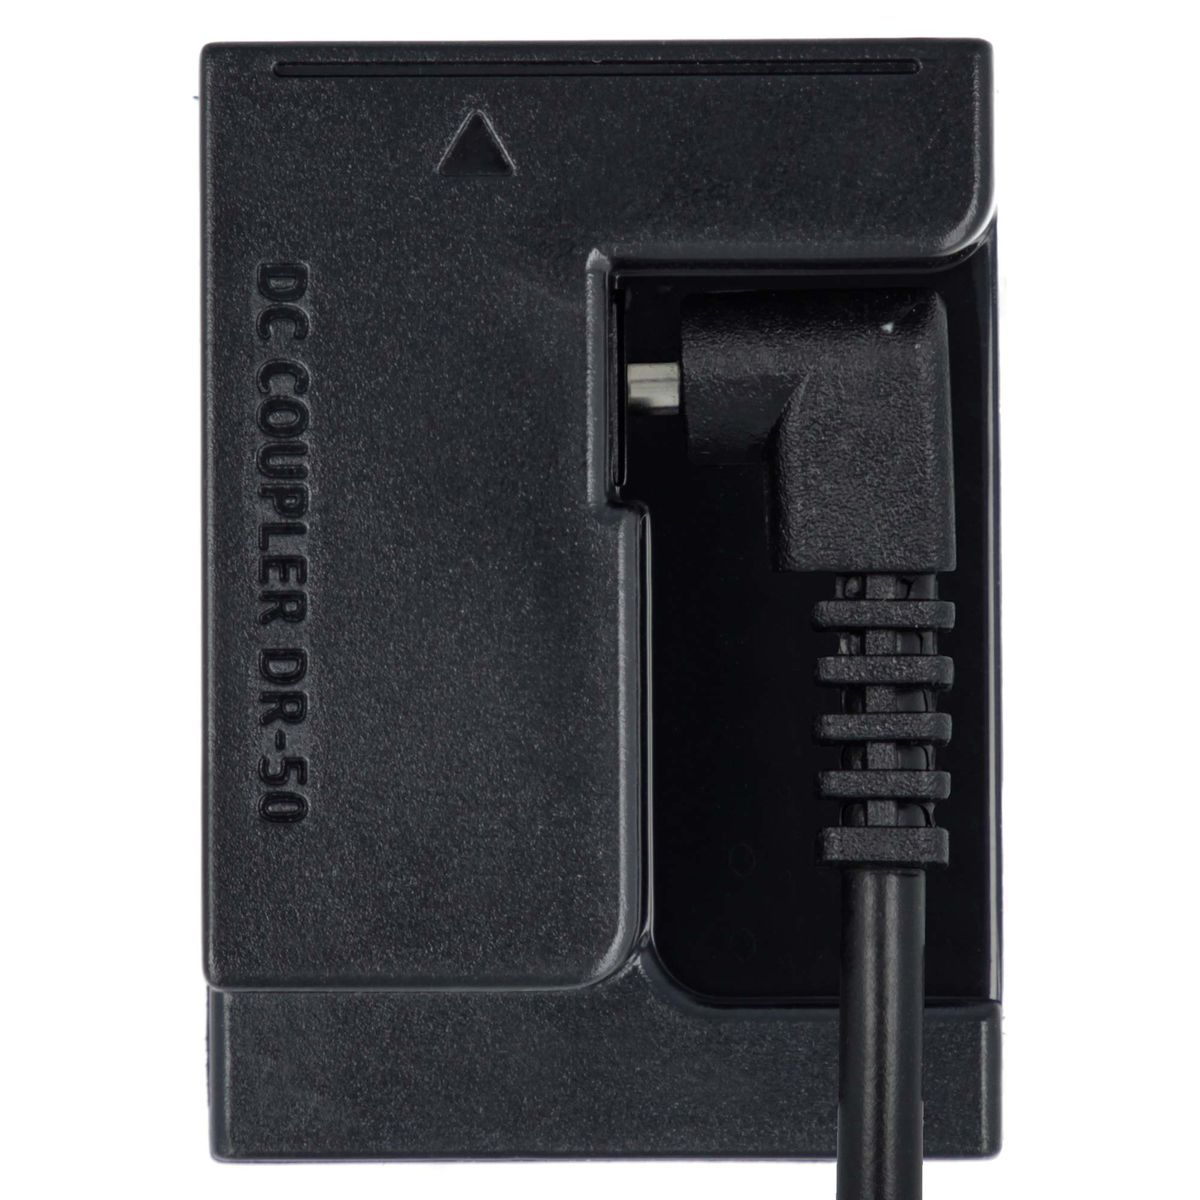 Adapter kompatibel AKKU-KING Angabe + Ladegerät keine Kuppler Canon, DR-50 USB-C Canon mit